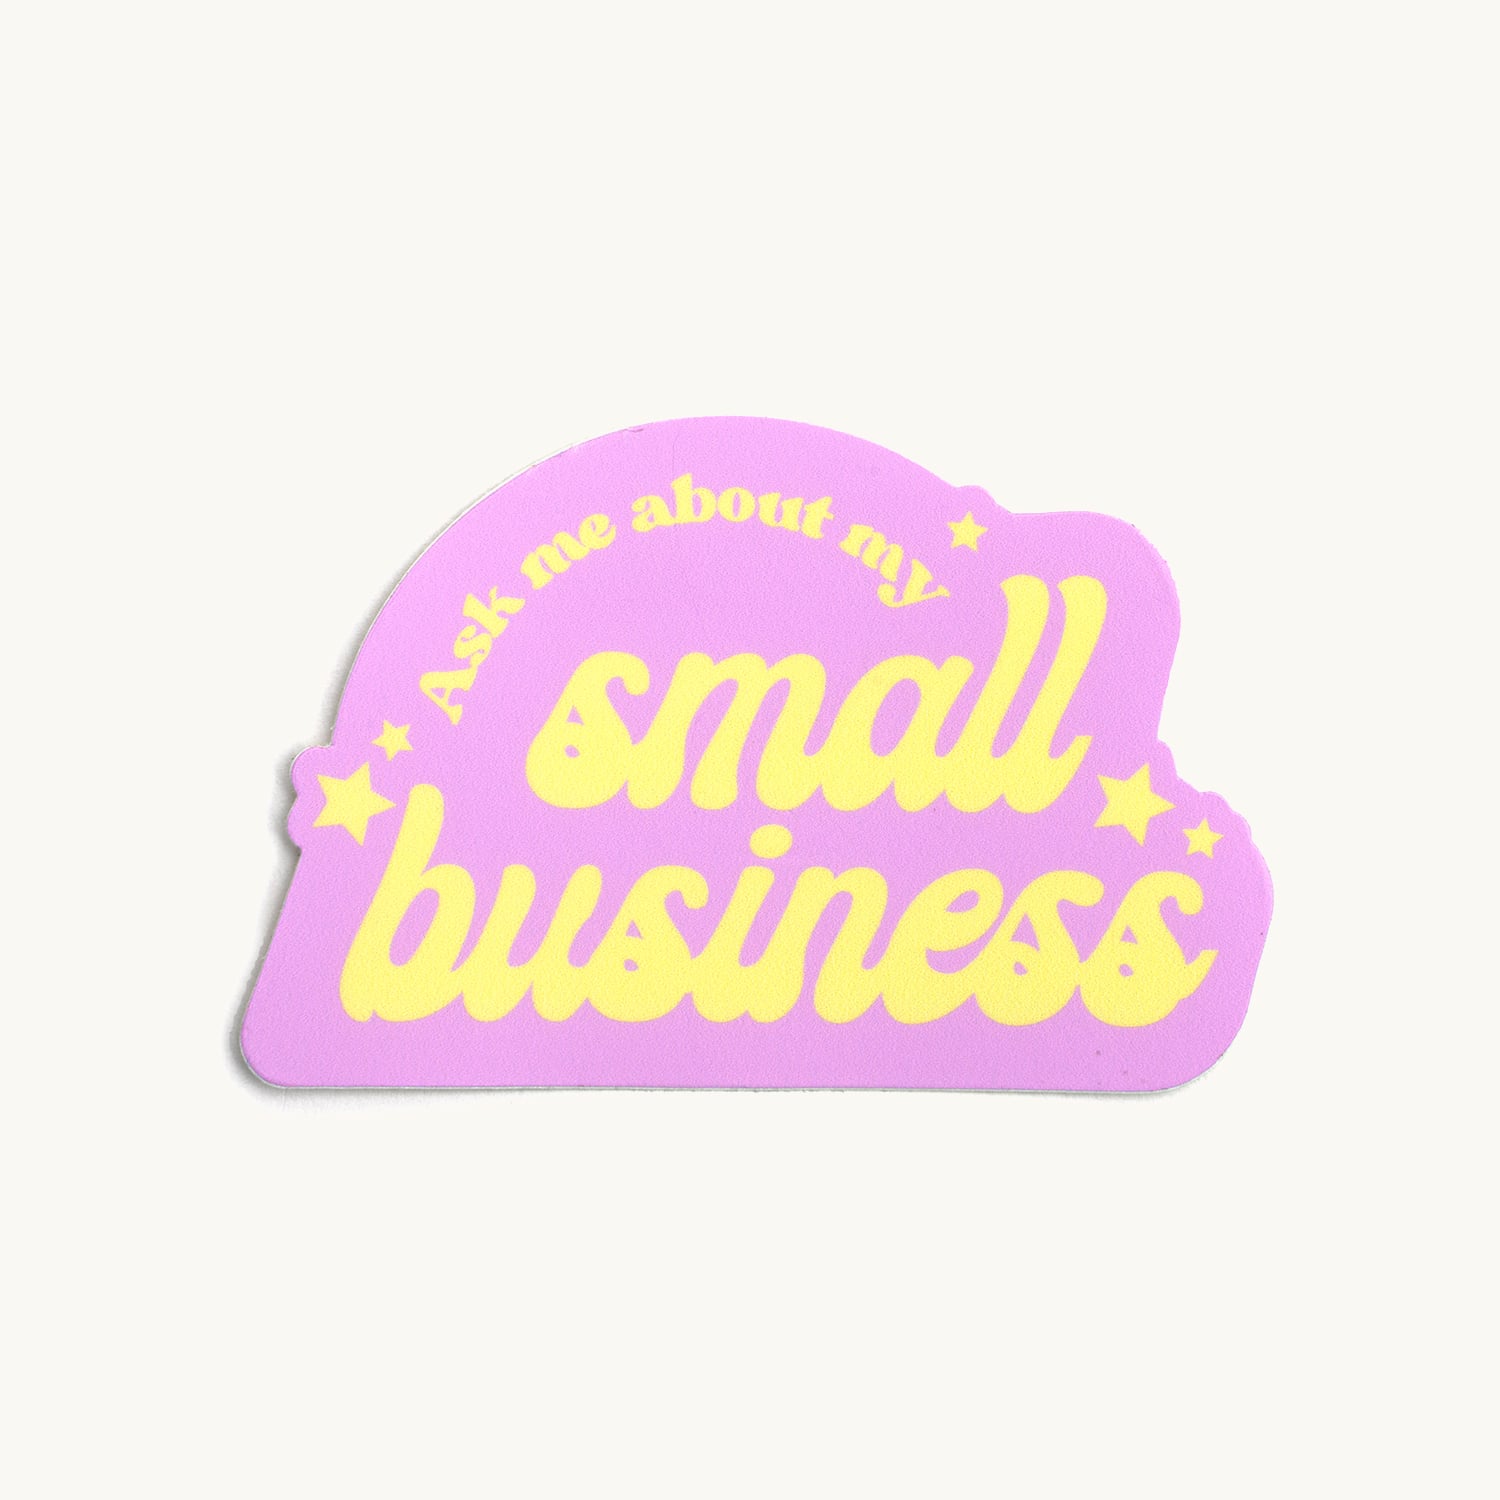 Small Business Sticker